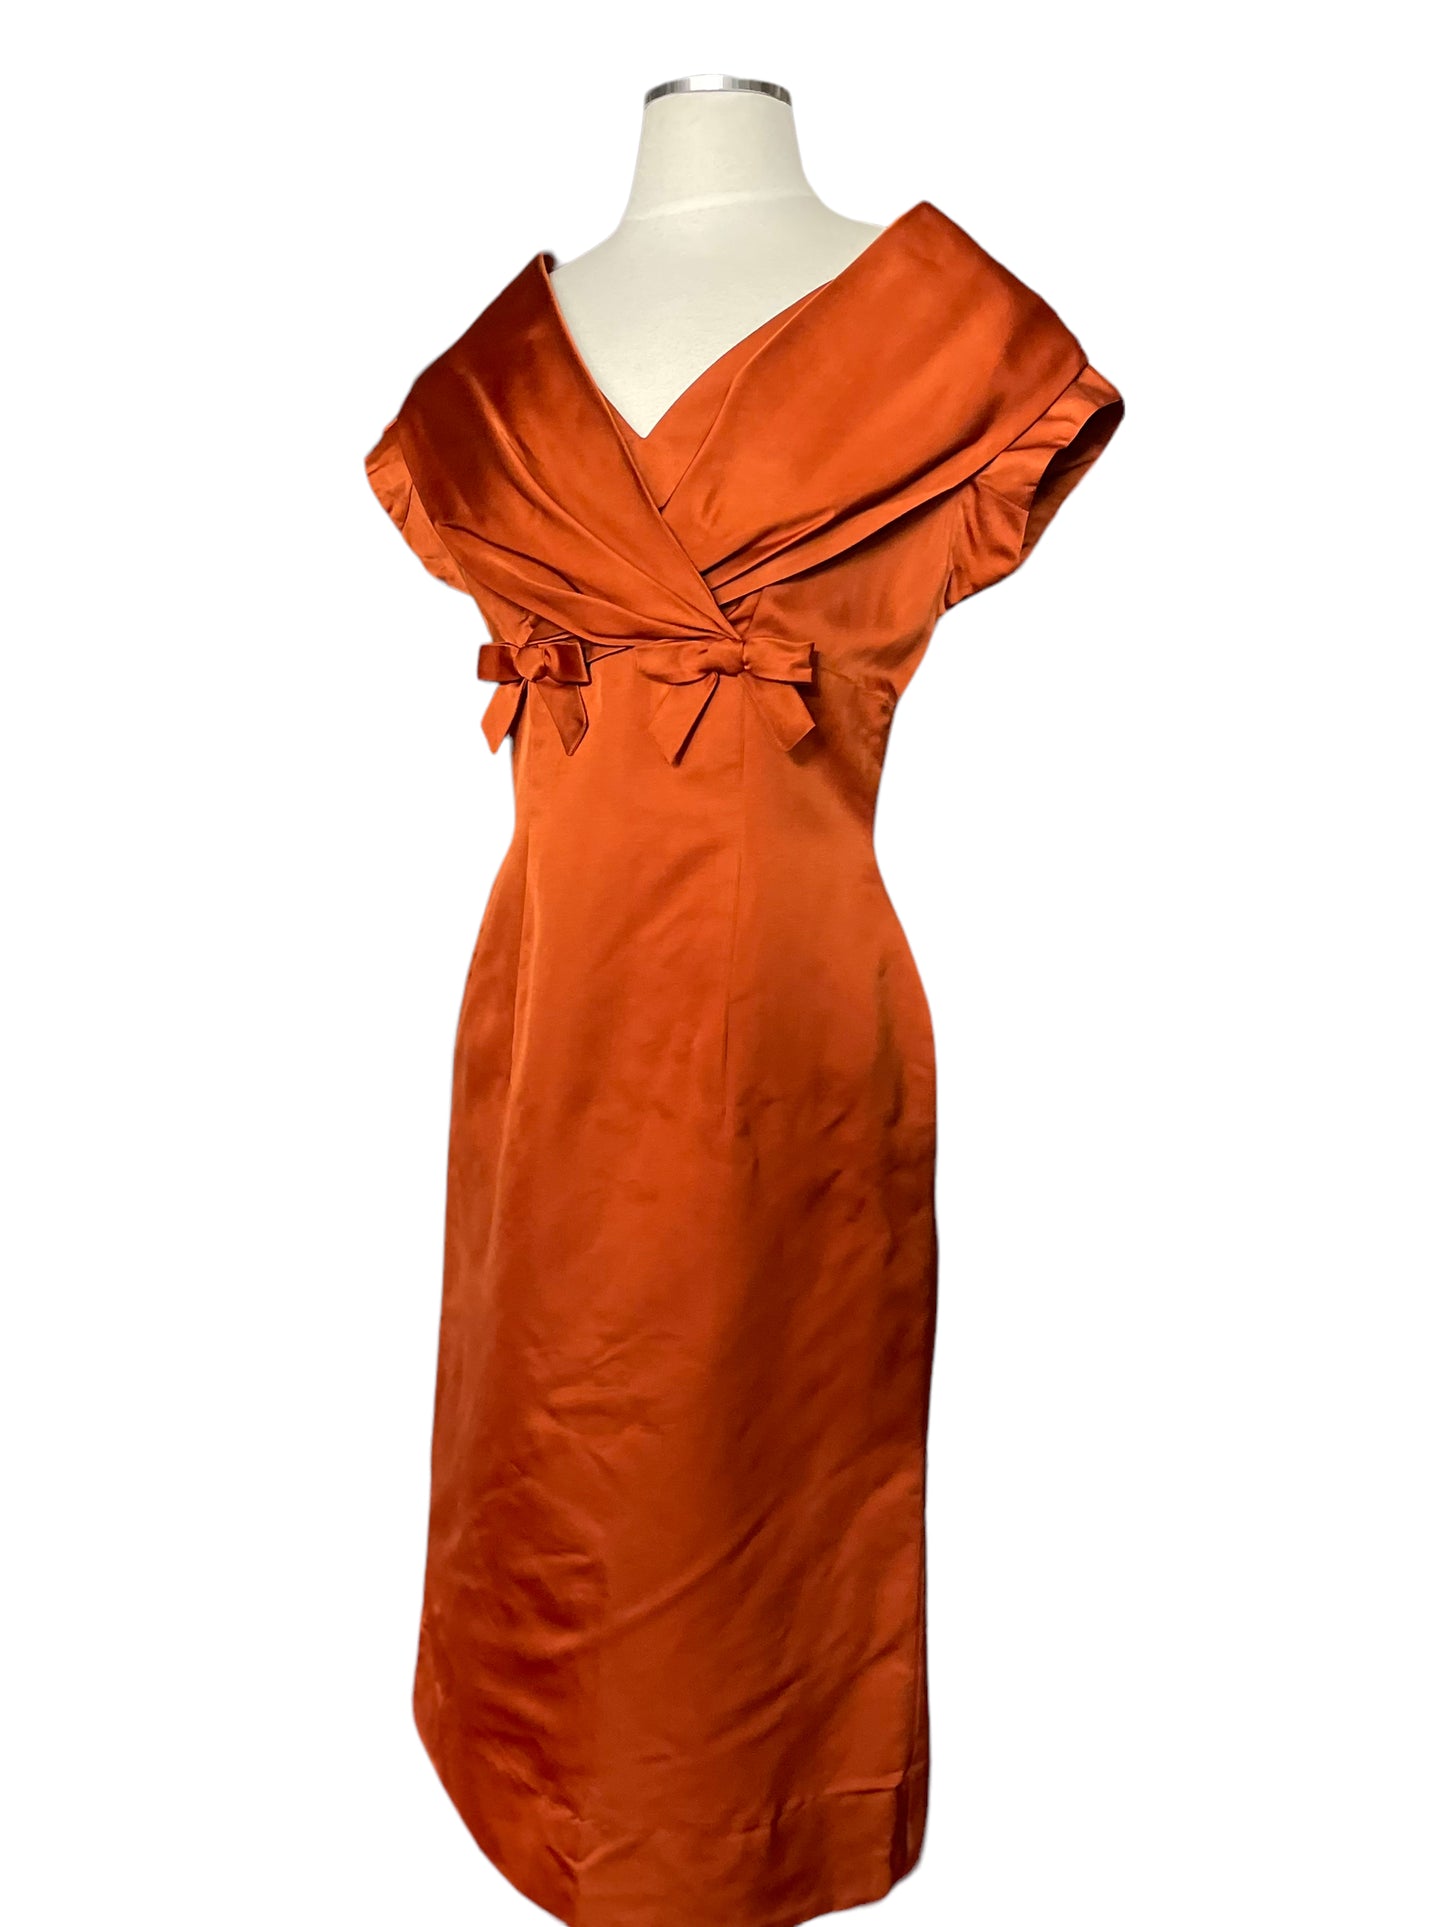 Full left side view of Vintage 1950s Burnt Orange Silk Dress SZ M